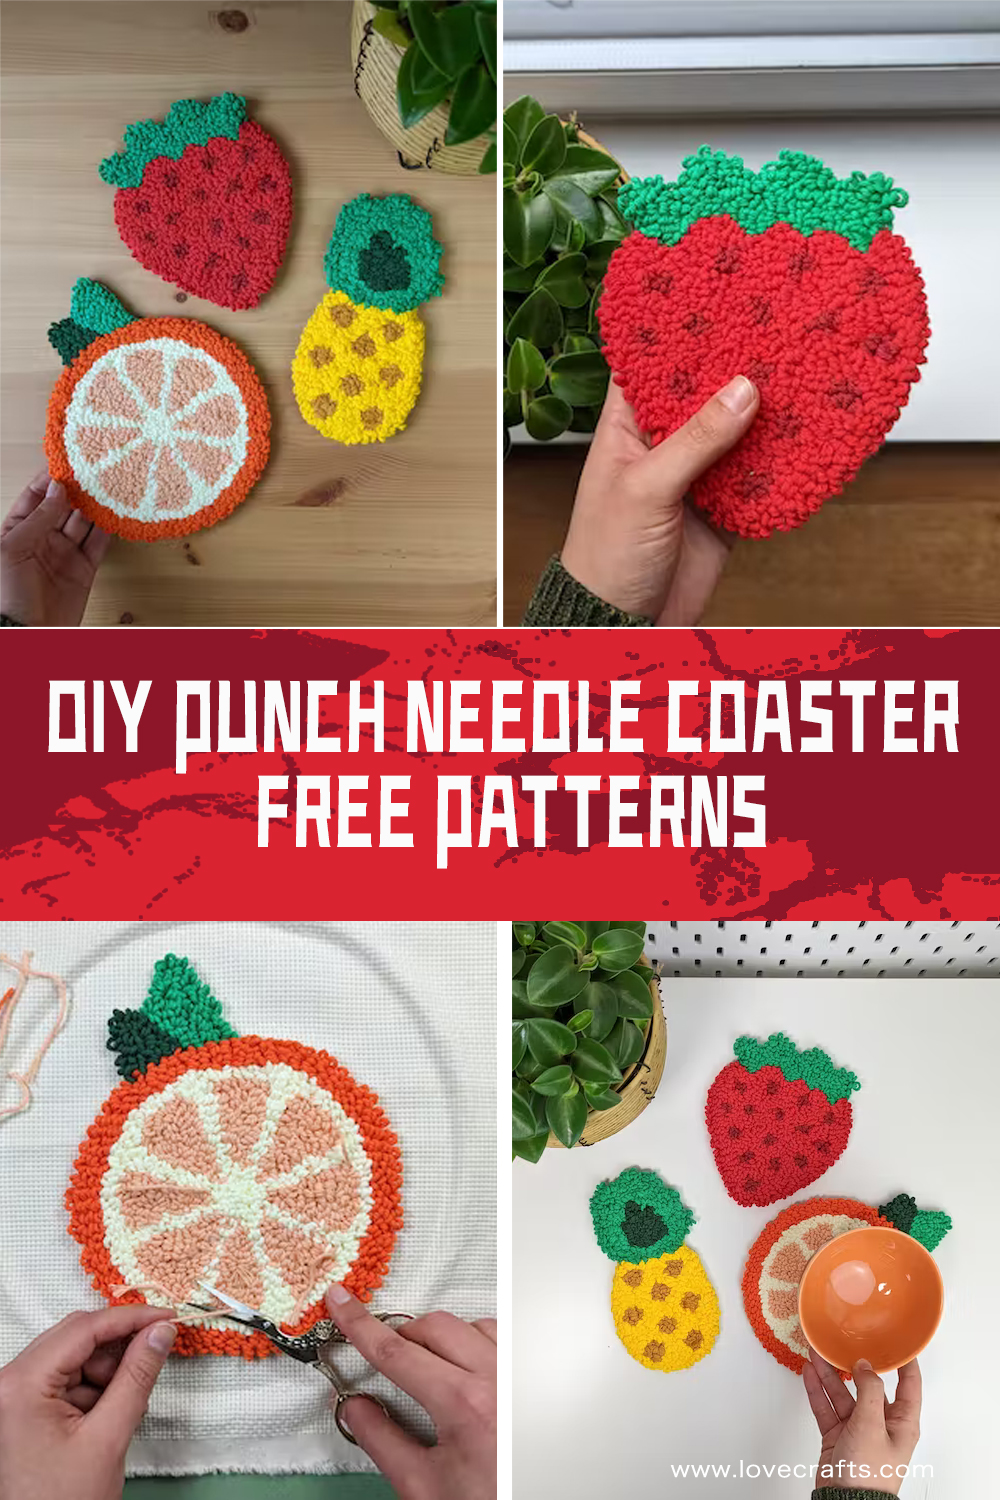 DIY Punch Needle Coaster Free Patterns 